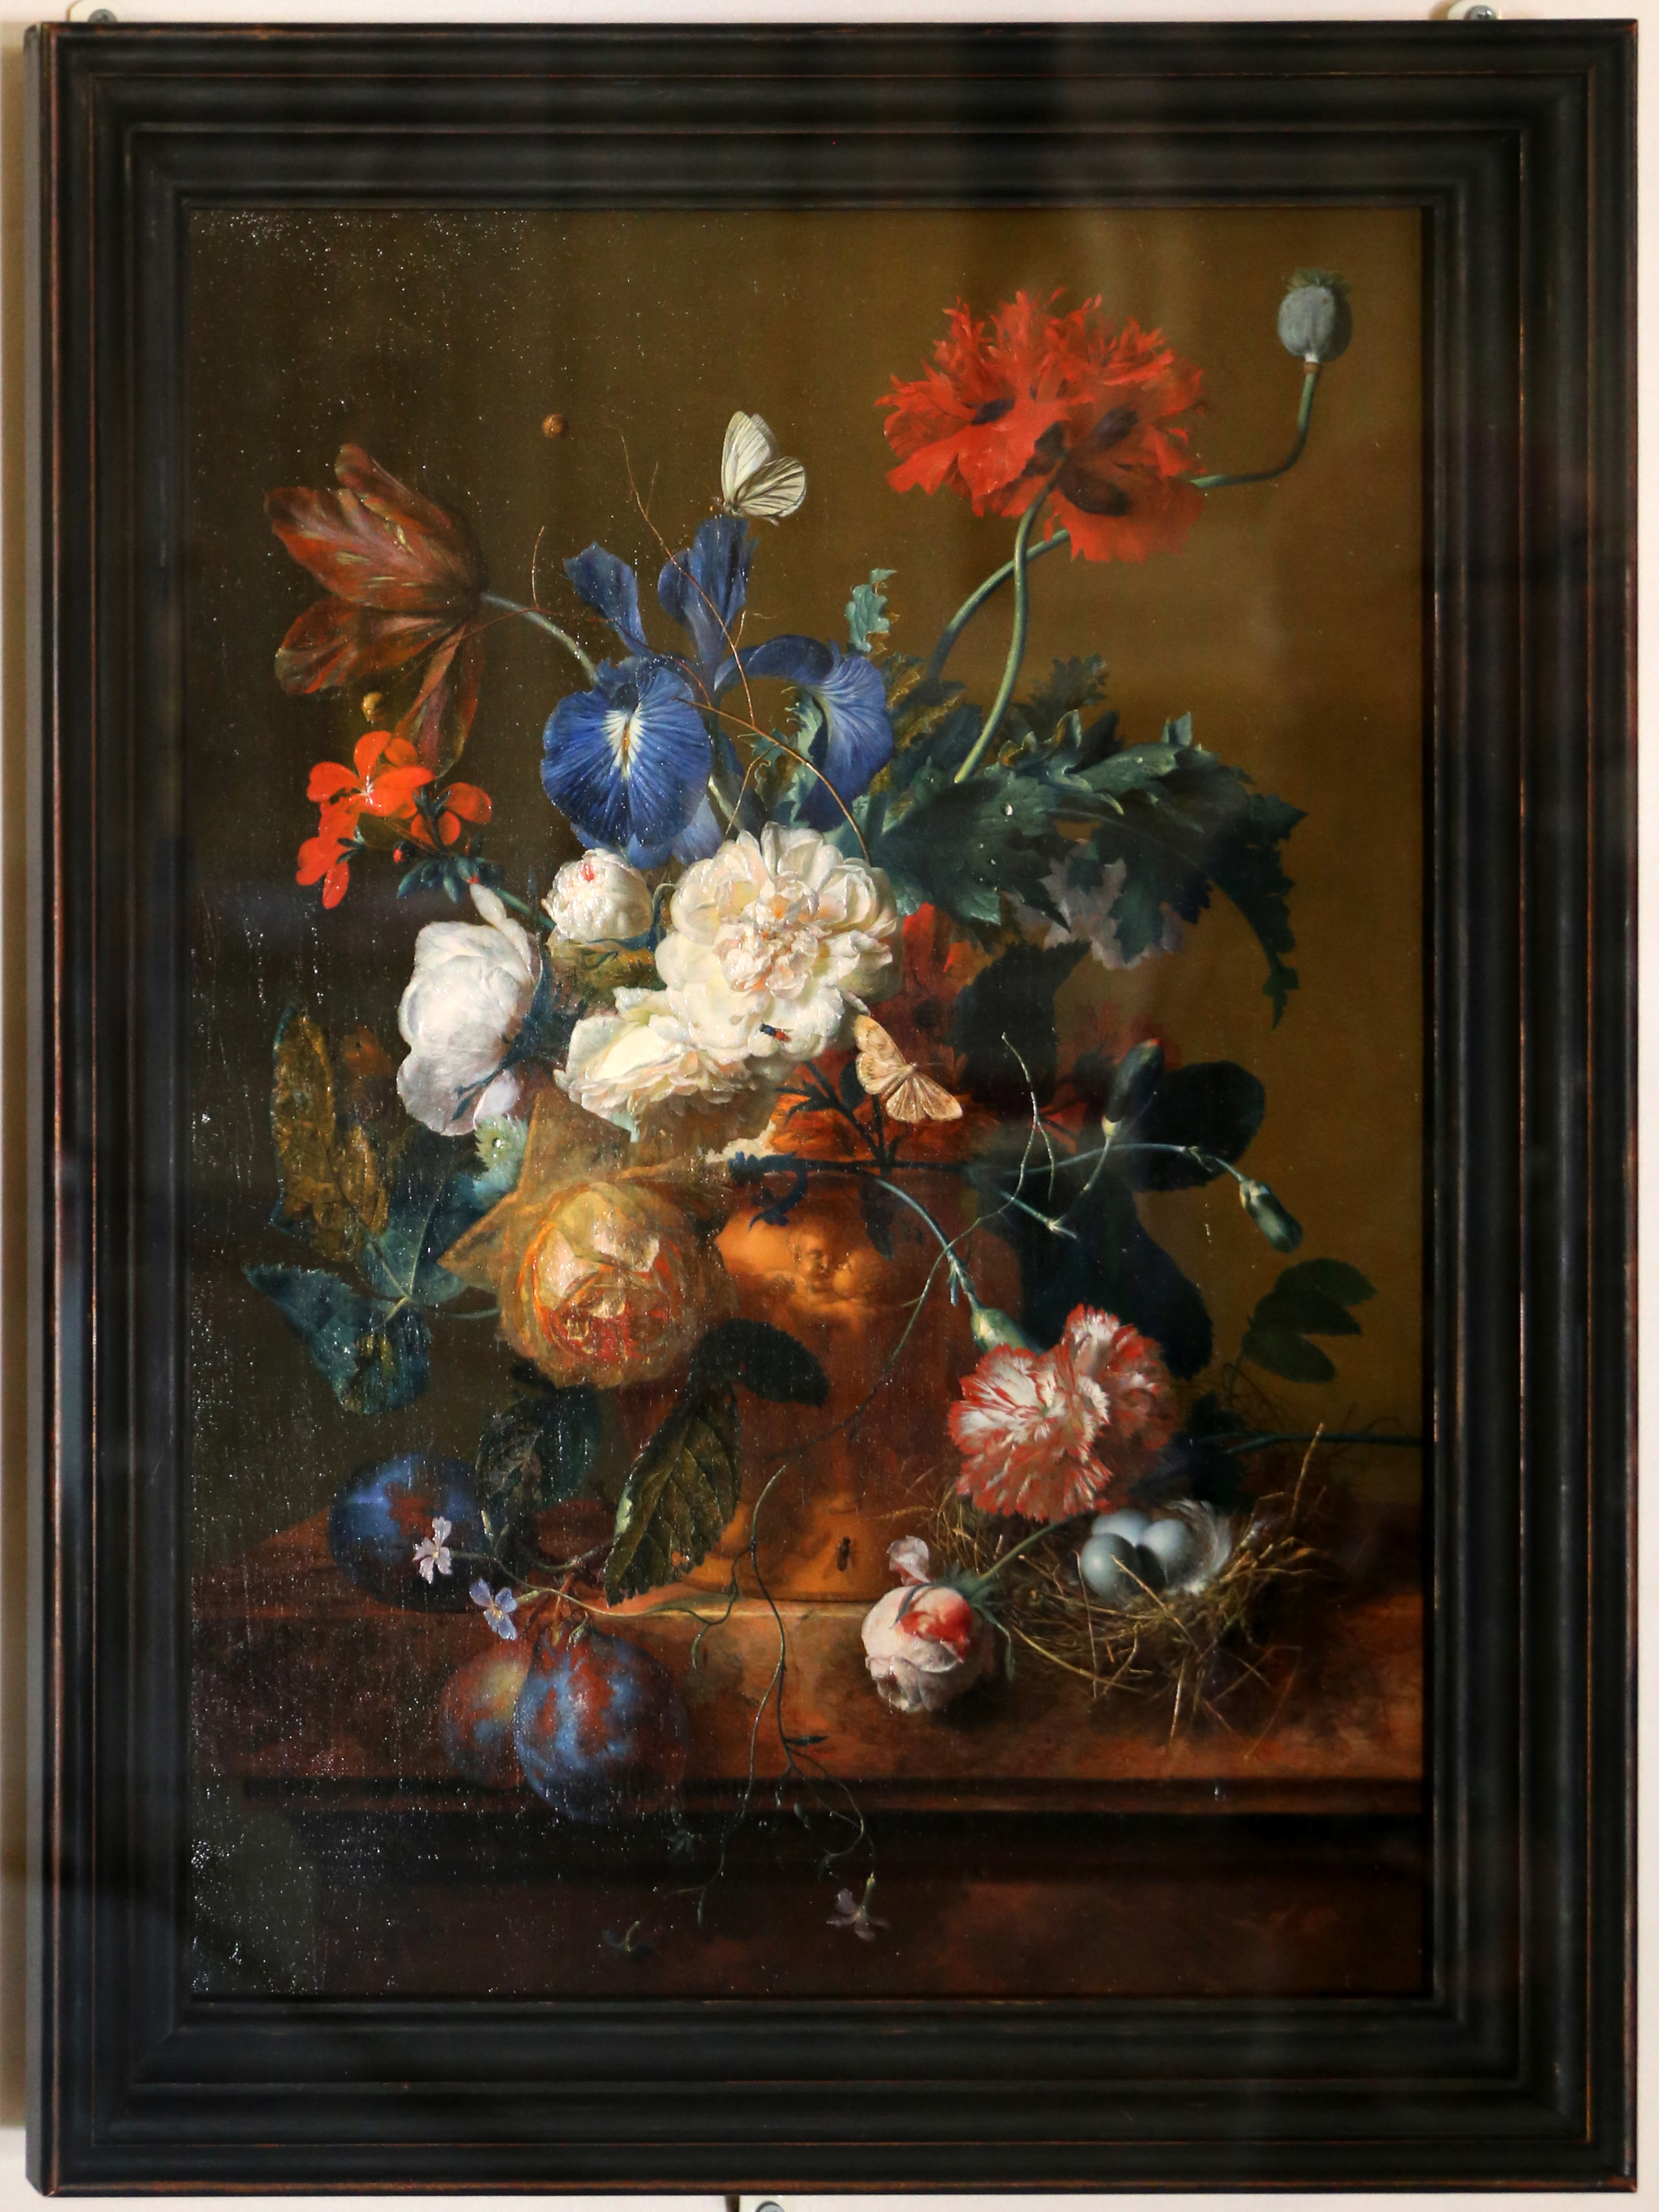 Vaso di fiori (van Huysum) - Wikipedia